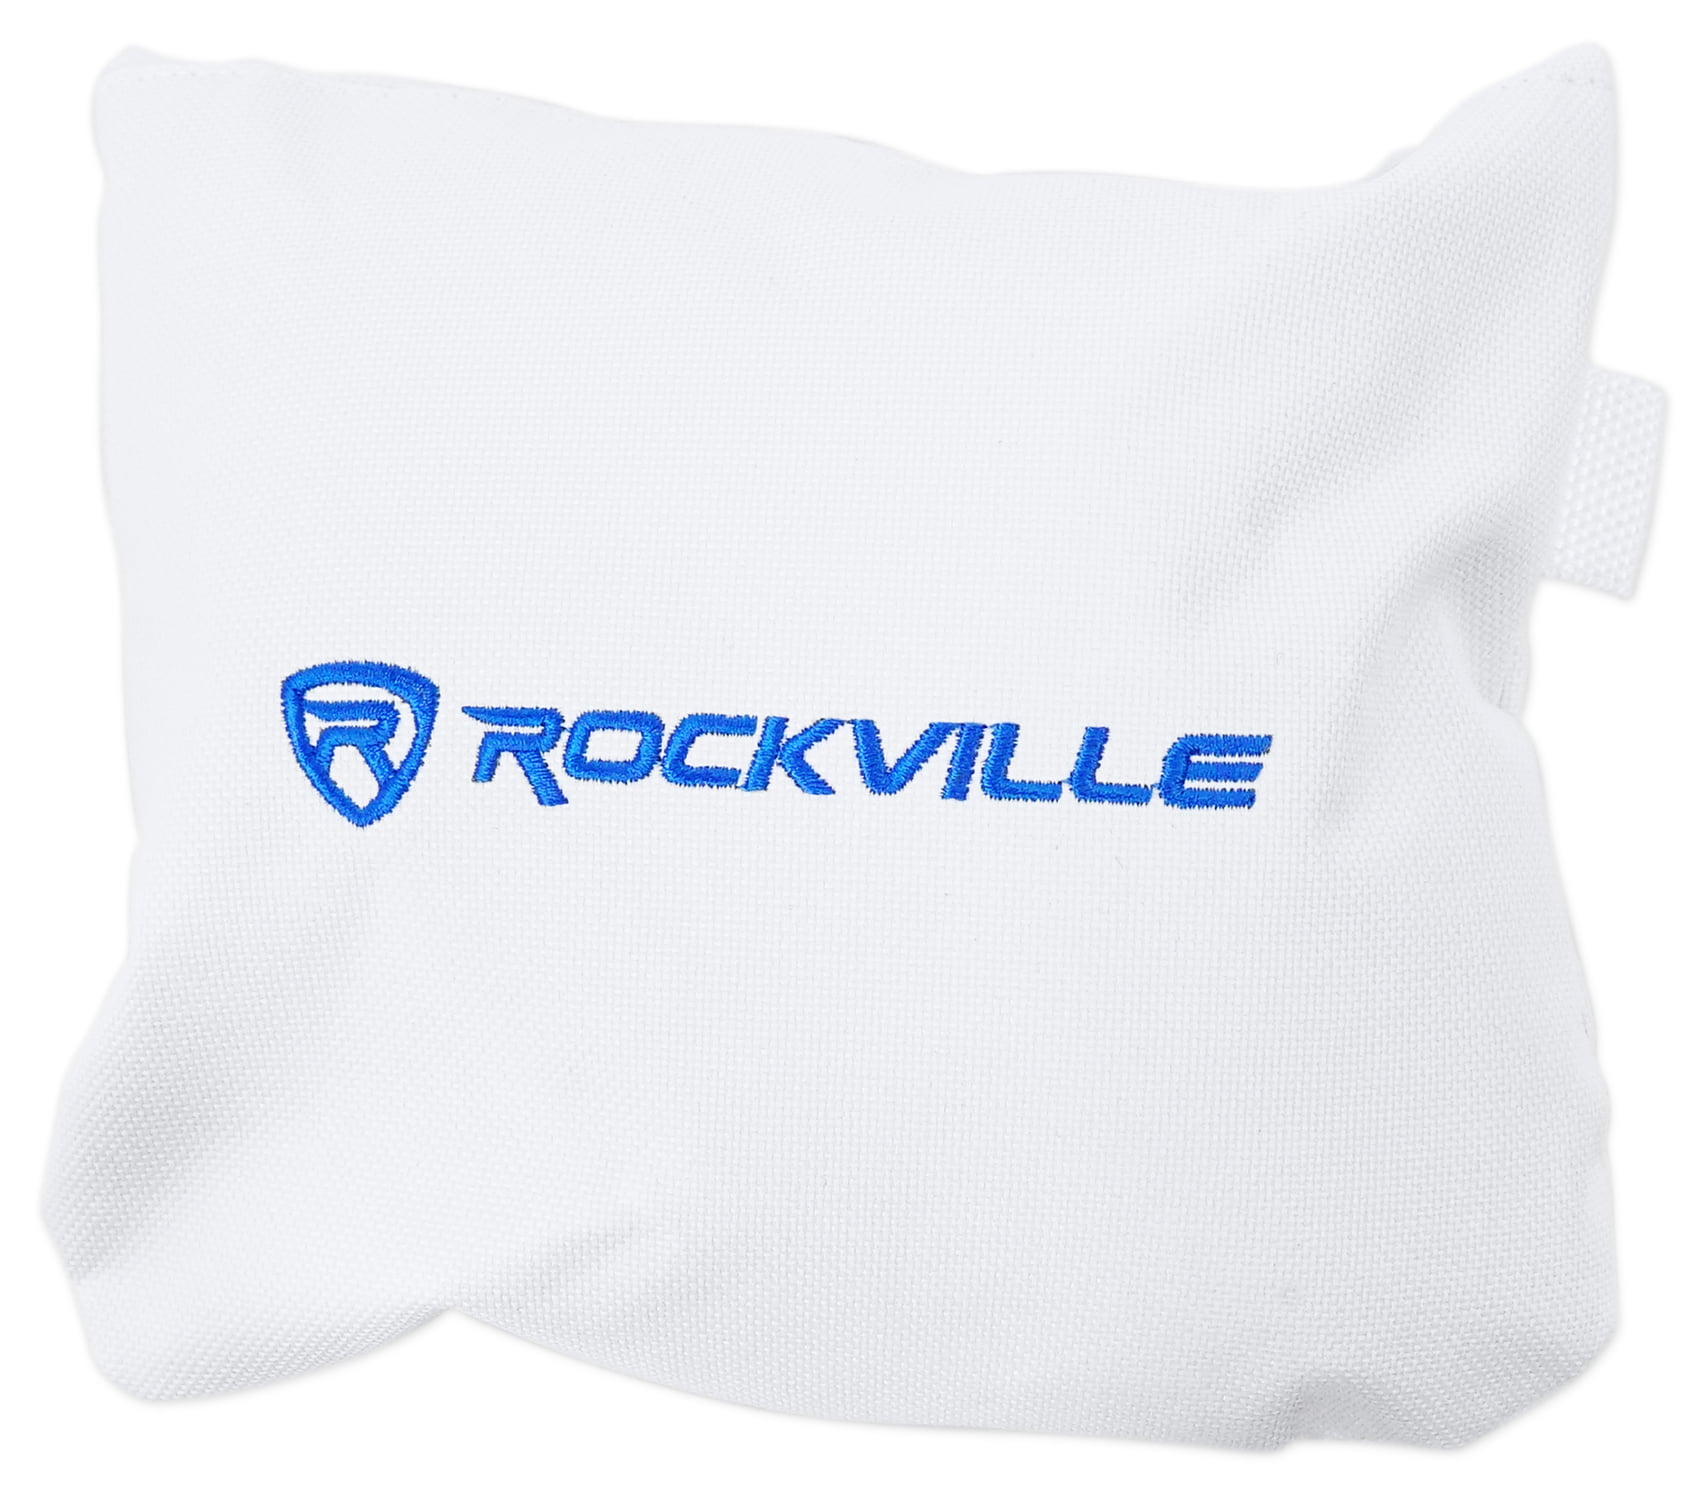 Rockville RLB40 Padded Travel Bag for 2 Chauvet or American DJ Effect Lights 